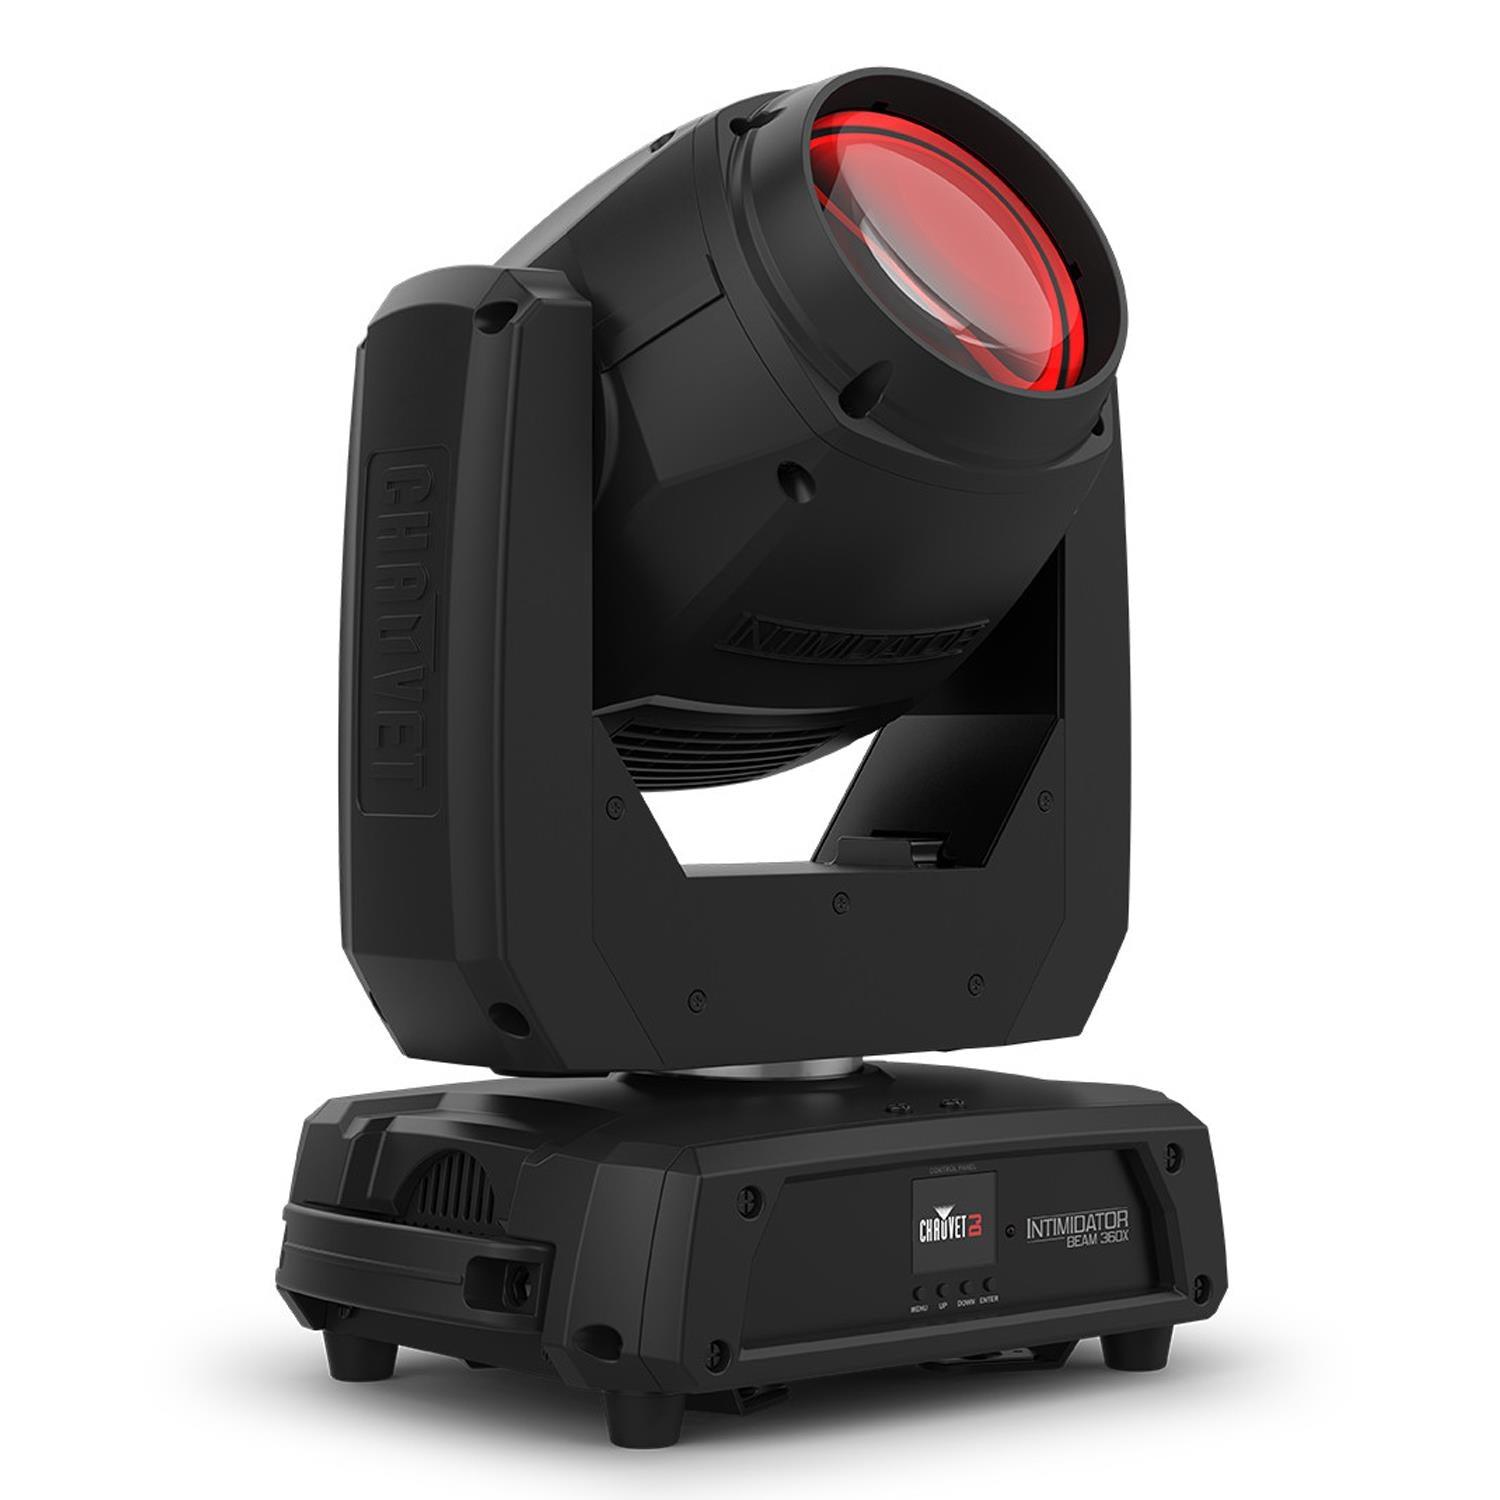 Chauvet DJ Intimidator Beam 360X LED Moving Head - DY Pro Audio